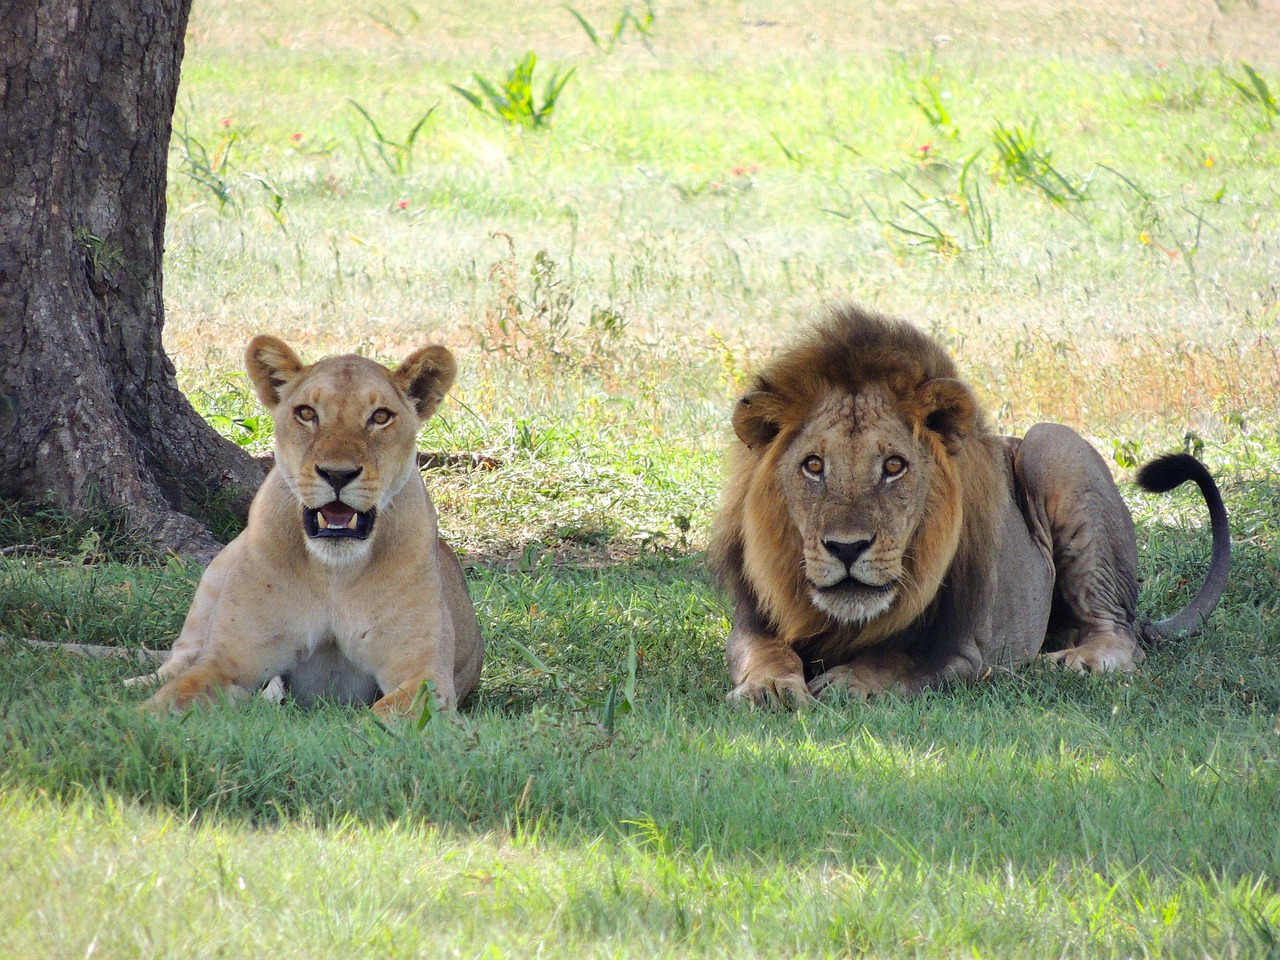 Tanzania Safari Tours - All You Need To Know